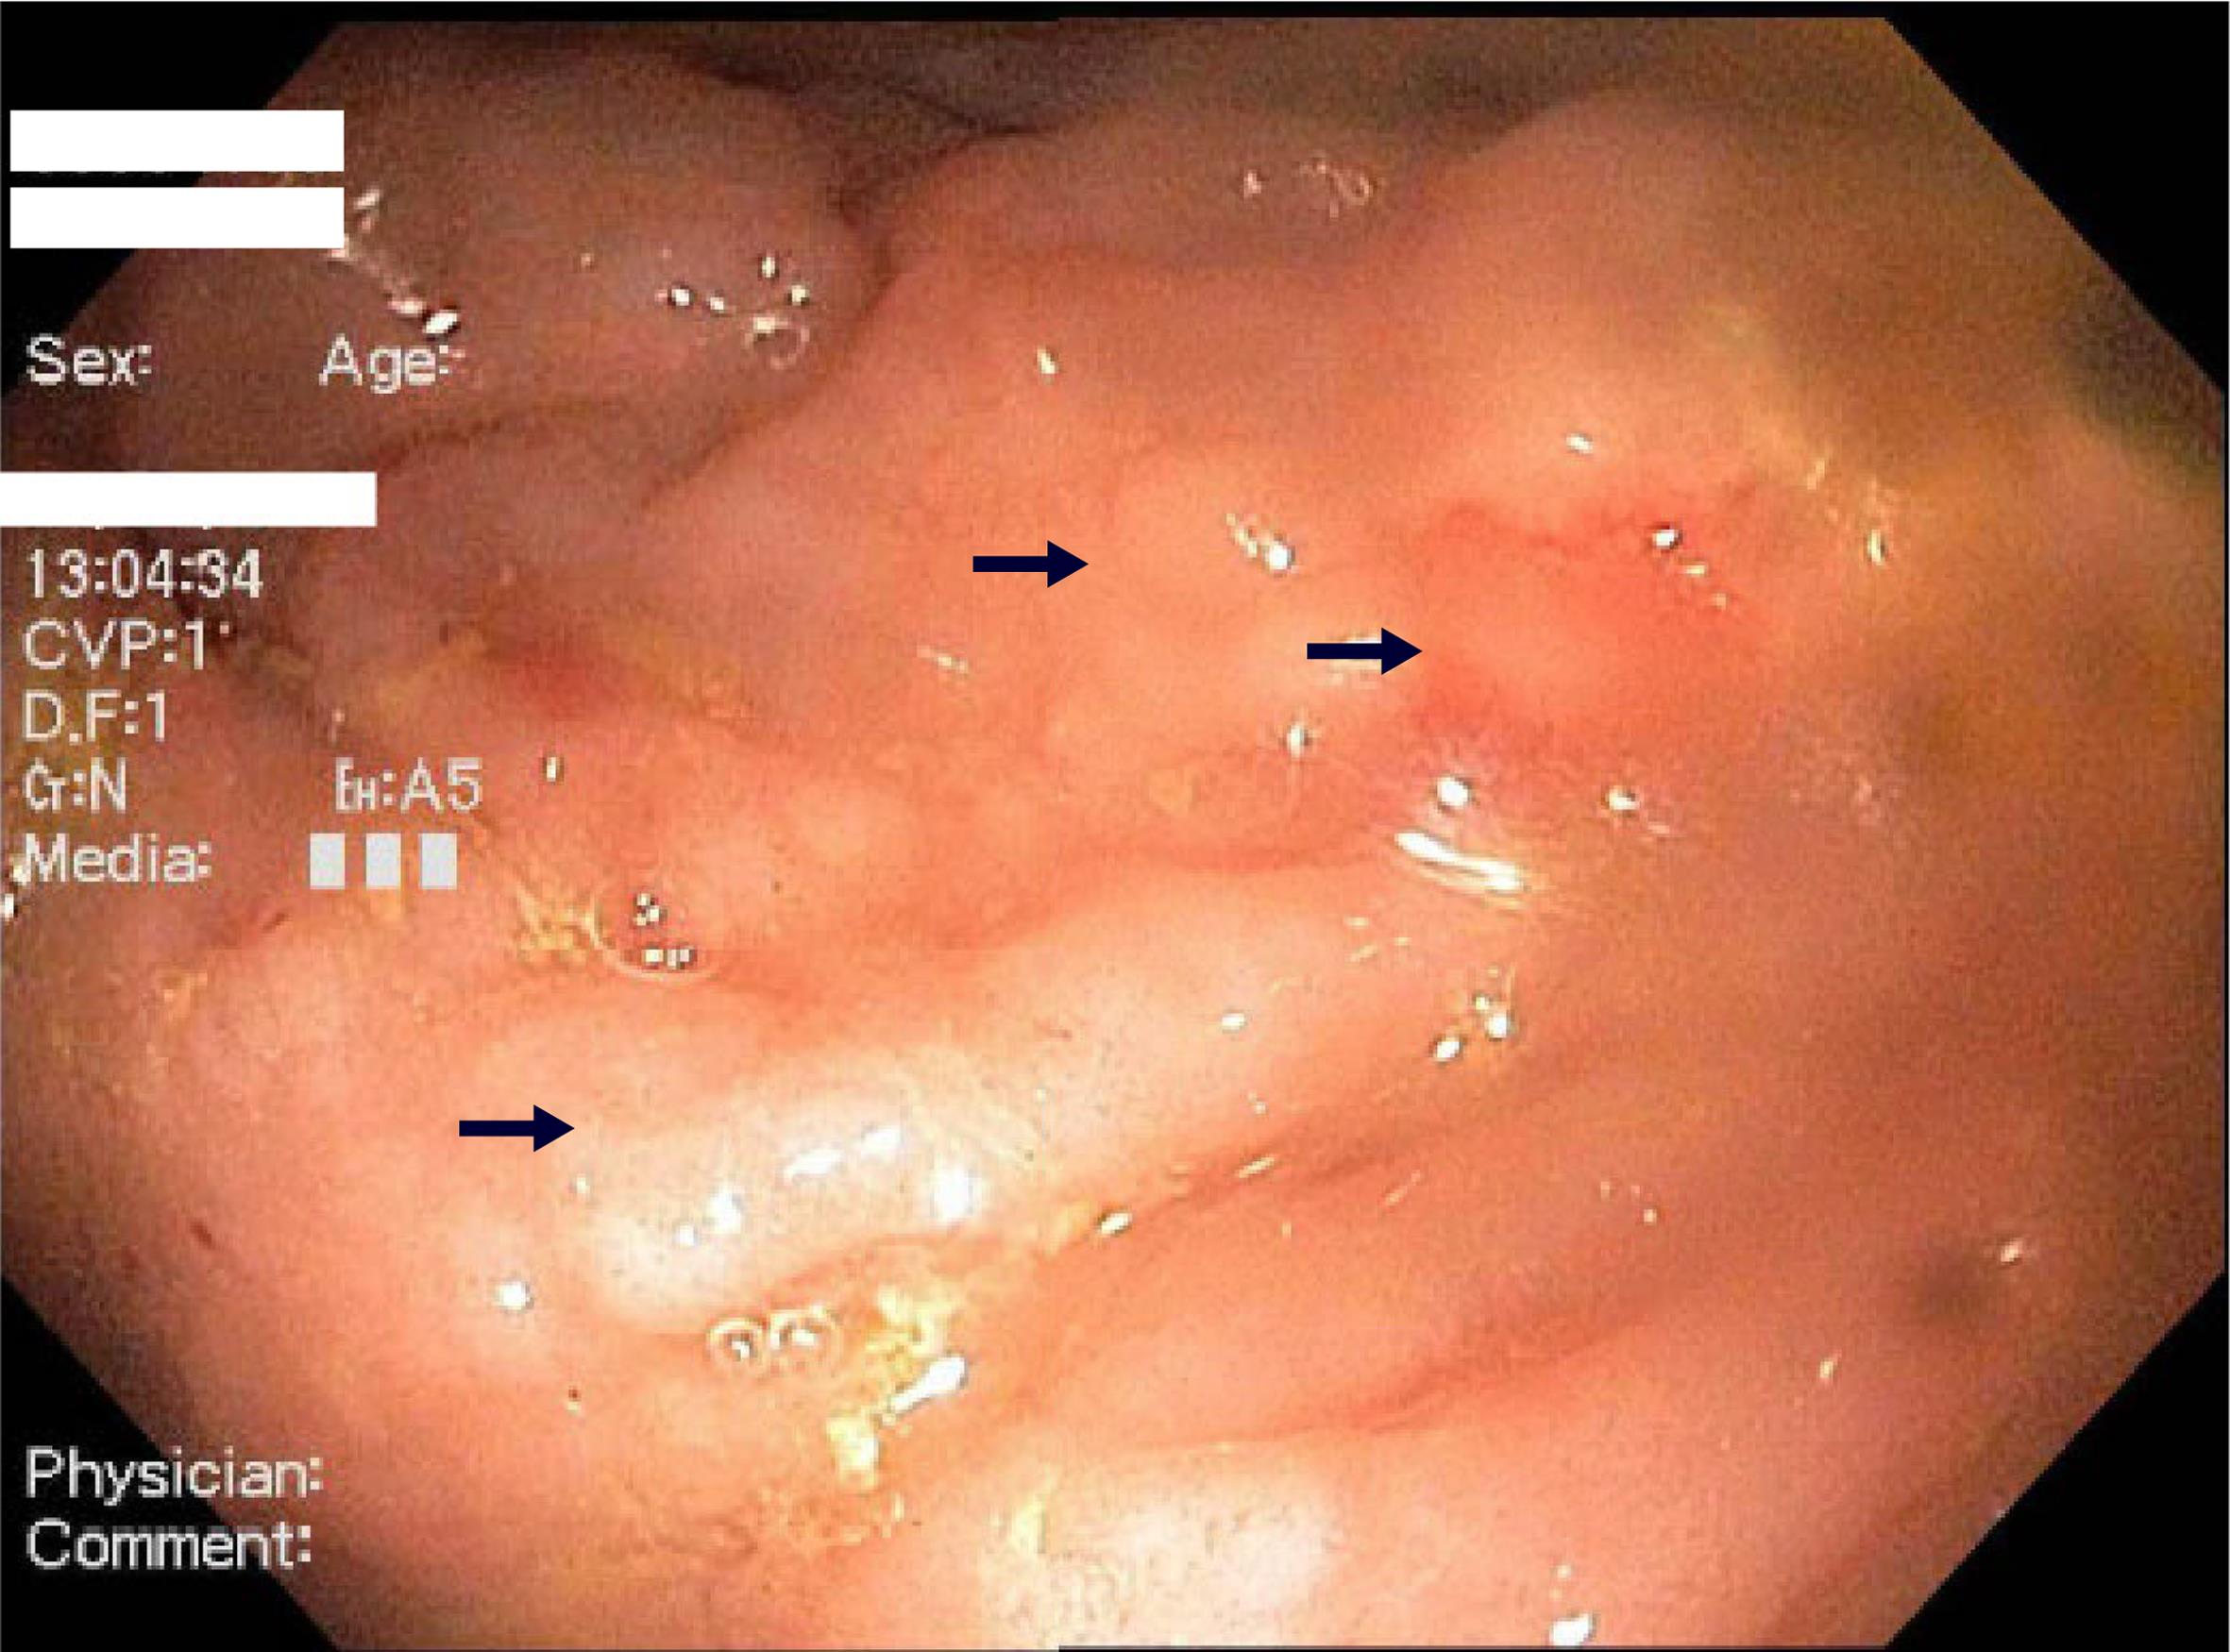 Nodular colonic mucosa (arrows) on colonoscopy corresponds to the site of metastases.